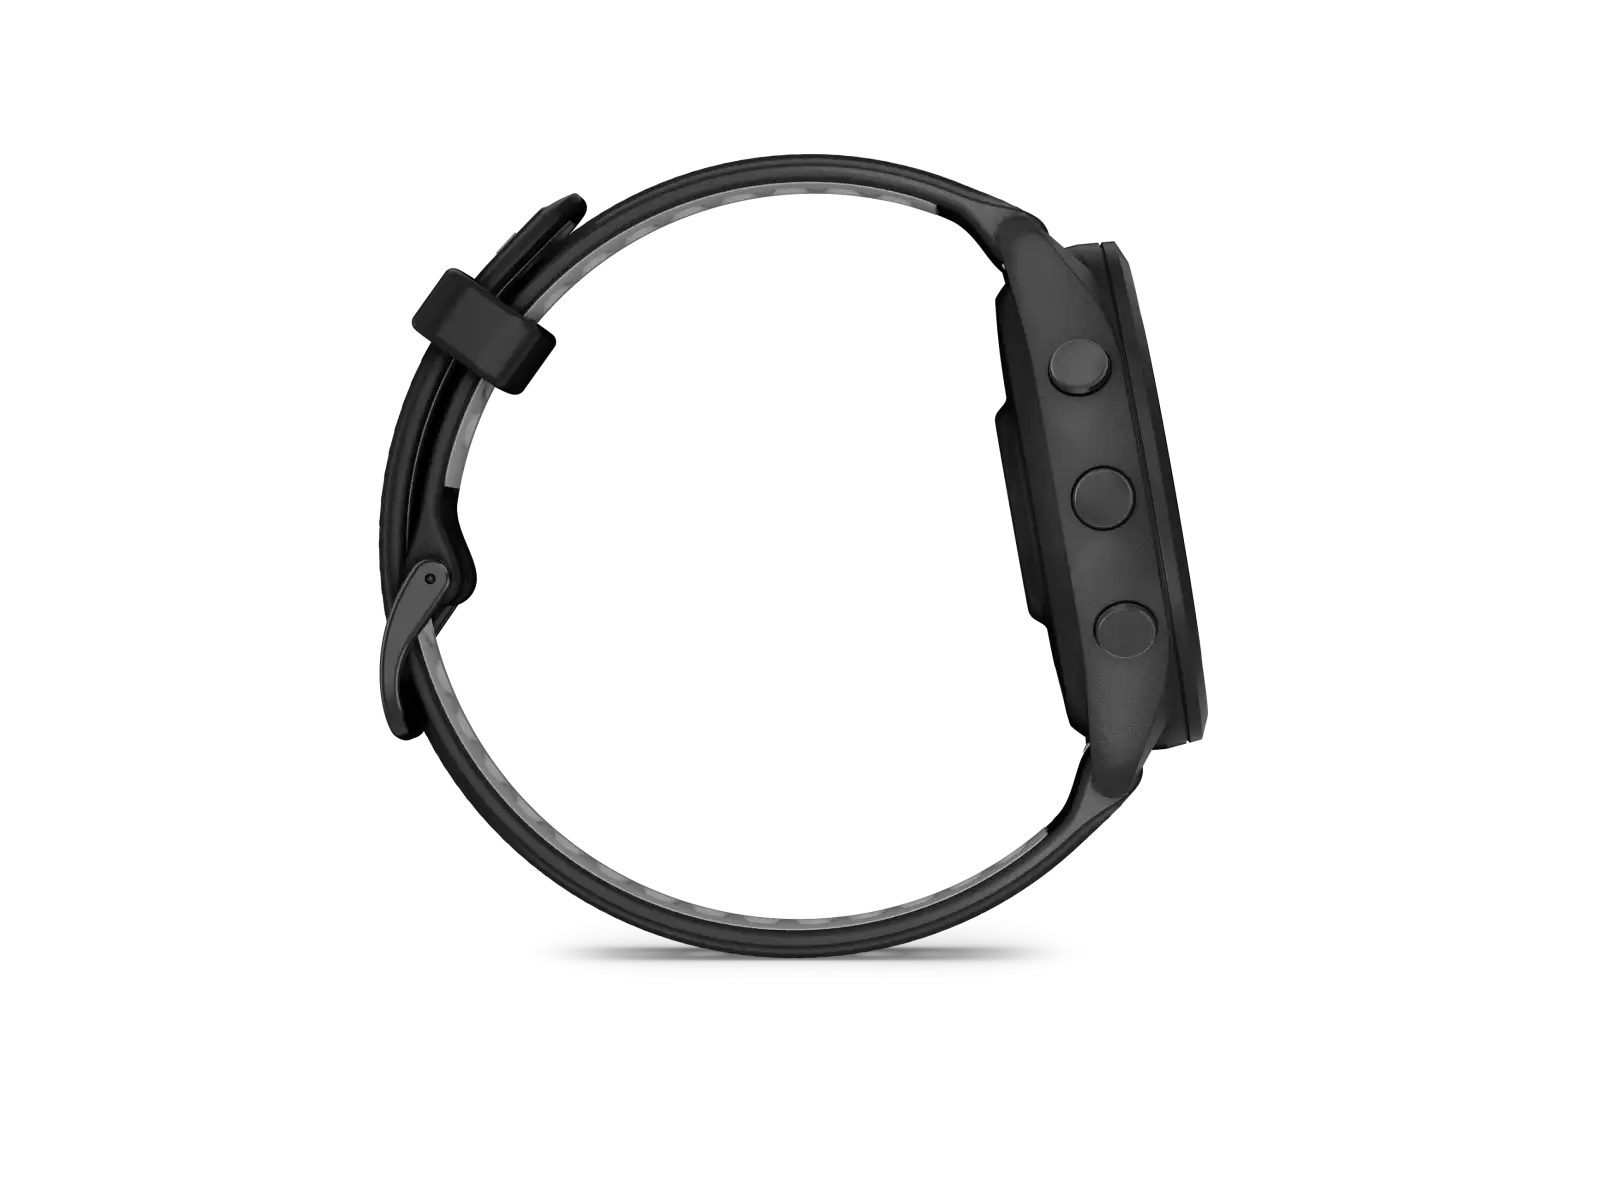 Inteligentné hodinky Garmin Forerunner 265 čierne